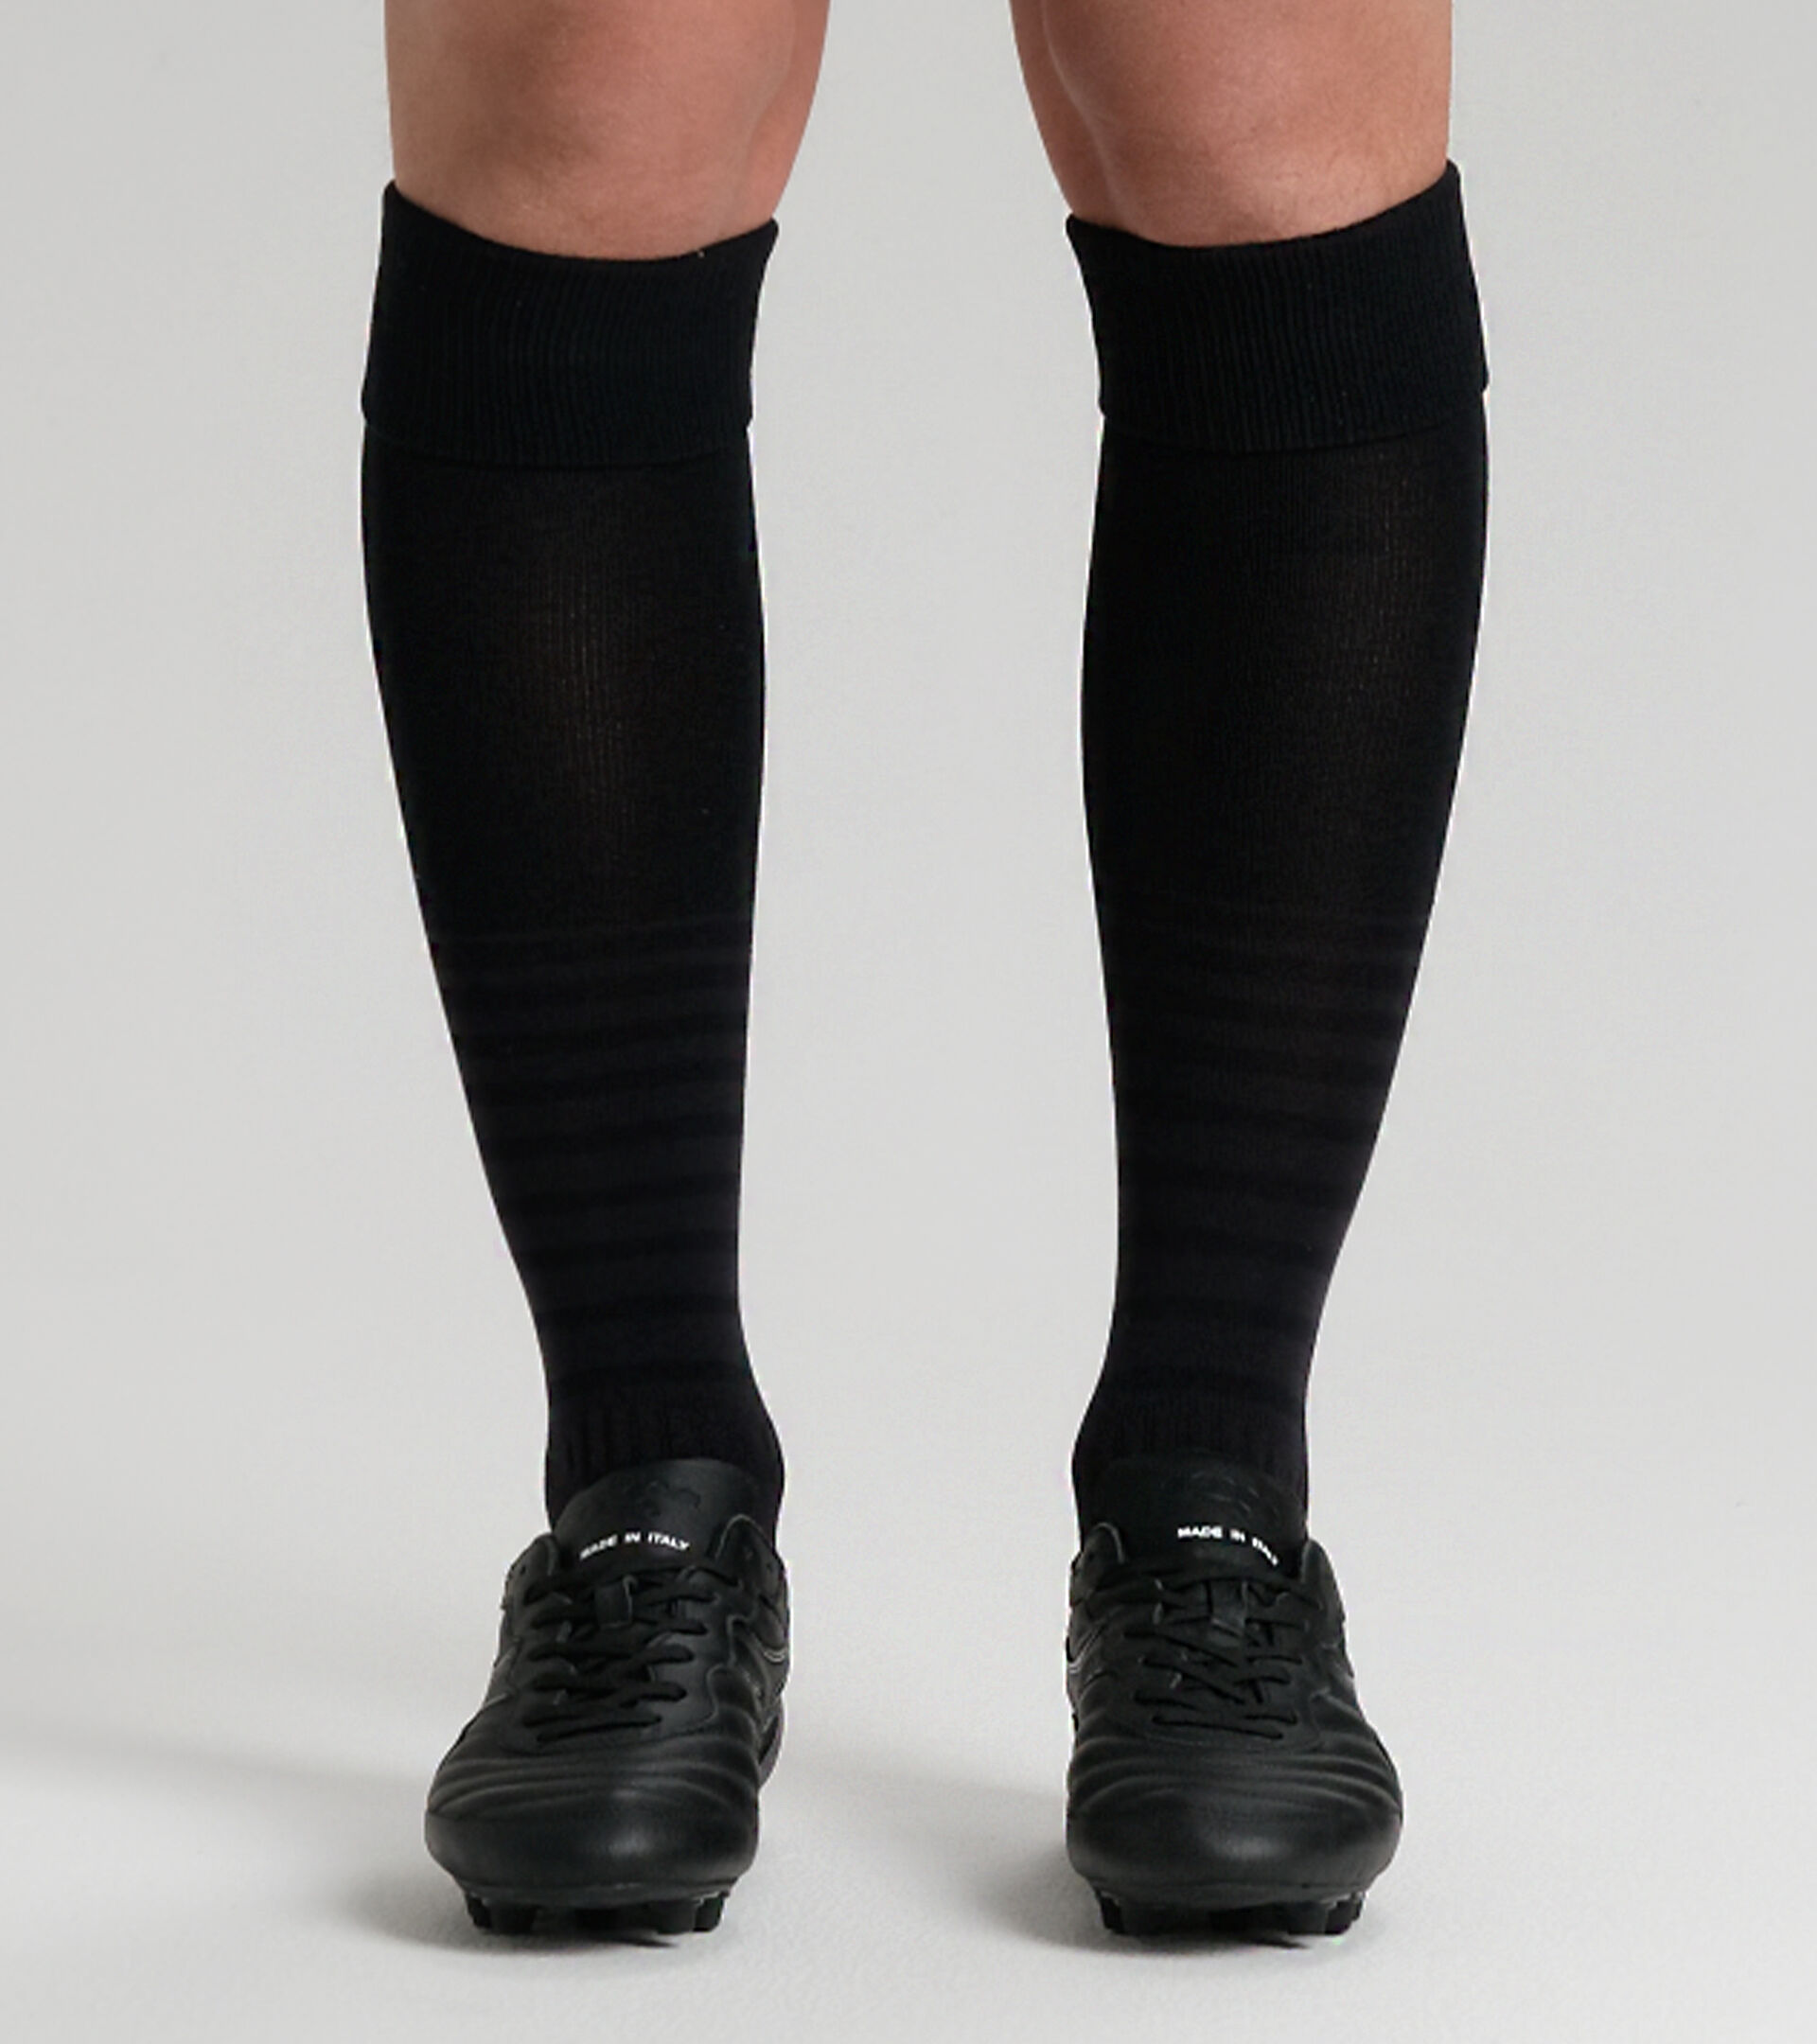 Firm ground football boots - Made in Italy BRASIL ITALY OG LT+  MDPU BLACK - Diadora